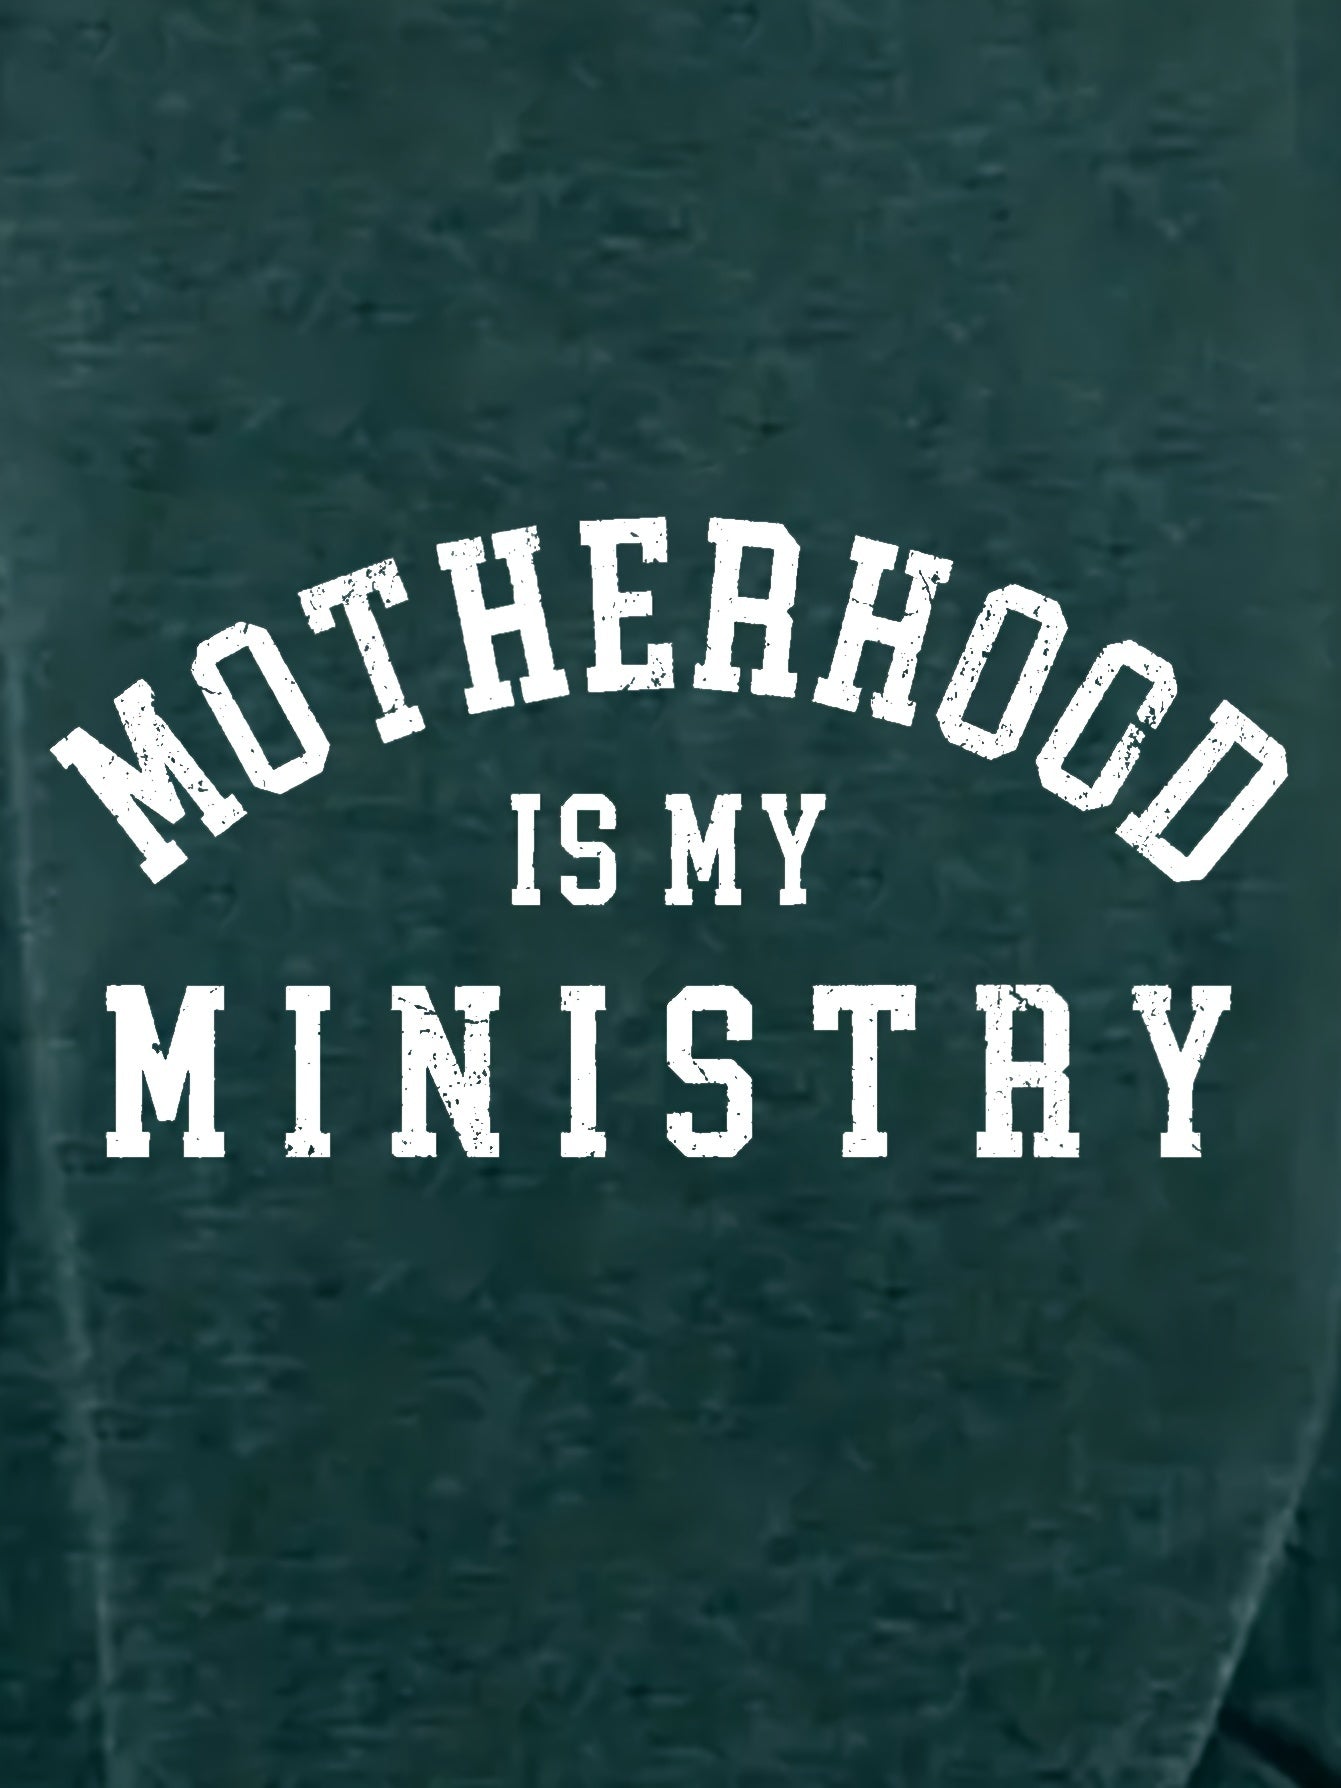 Motherhood Is My Ministry Women's Christian T-shirt claimedbygoddesigns